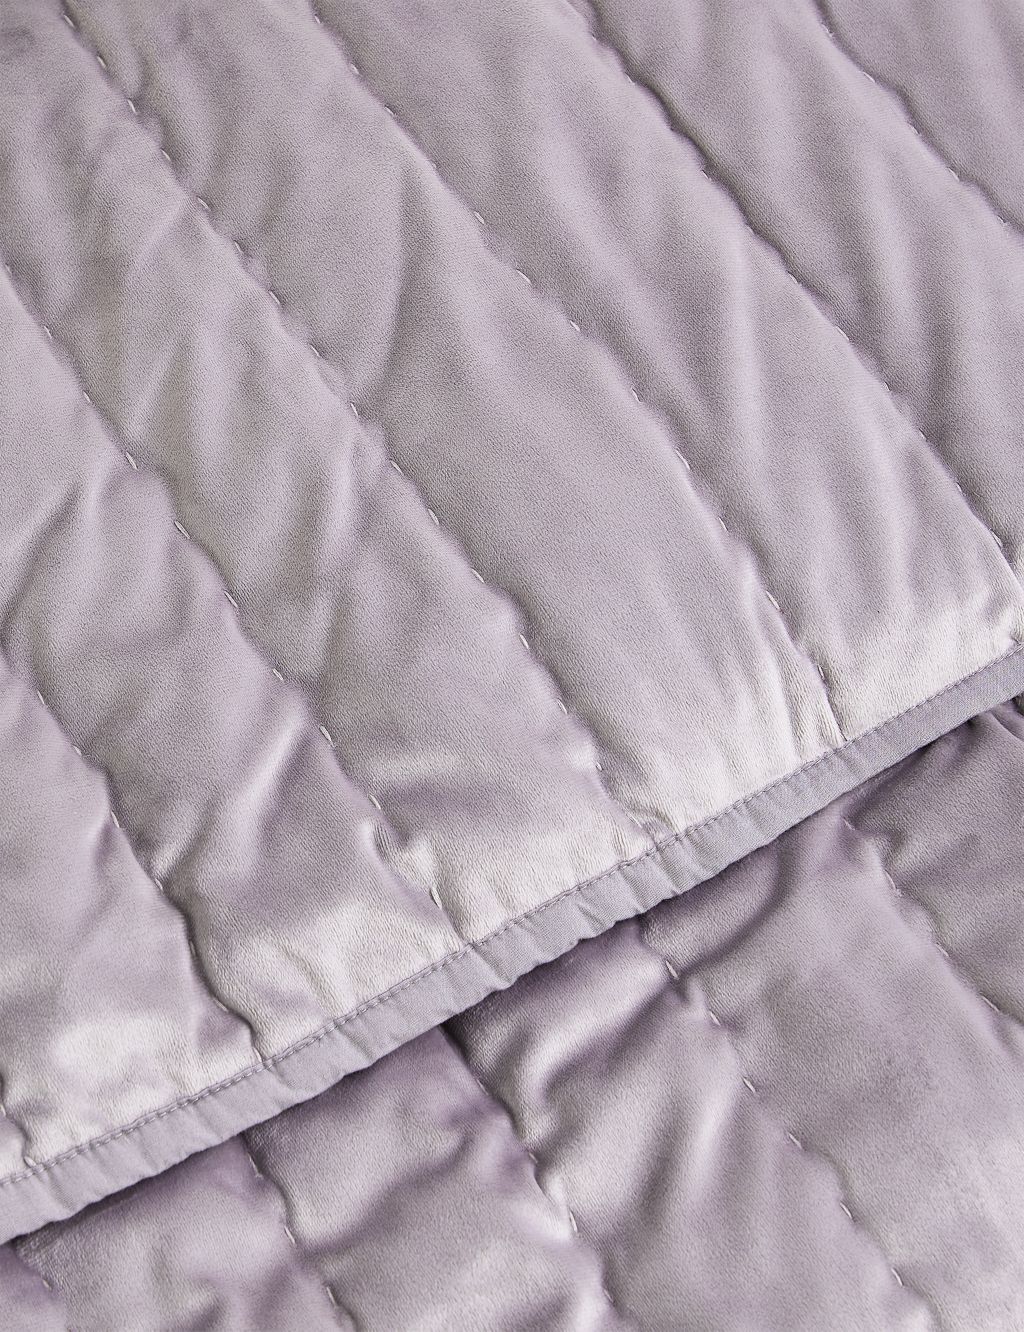 Velvet Quilted Bedspread 4 of 6